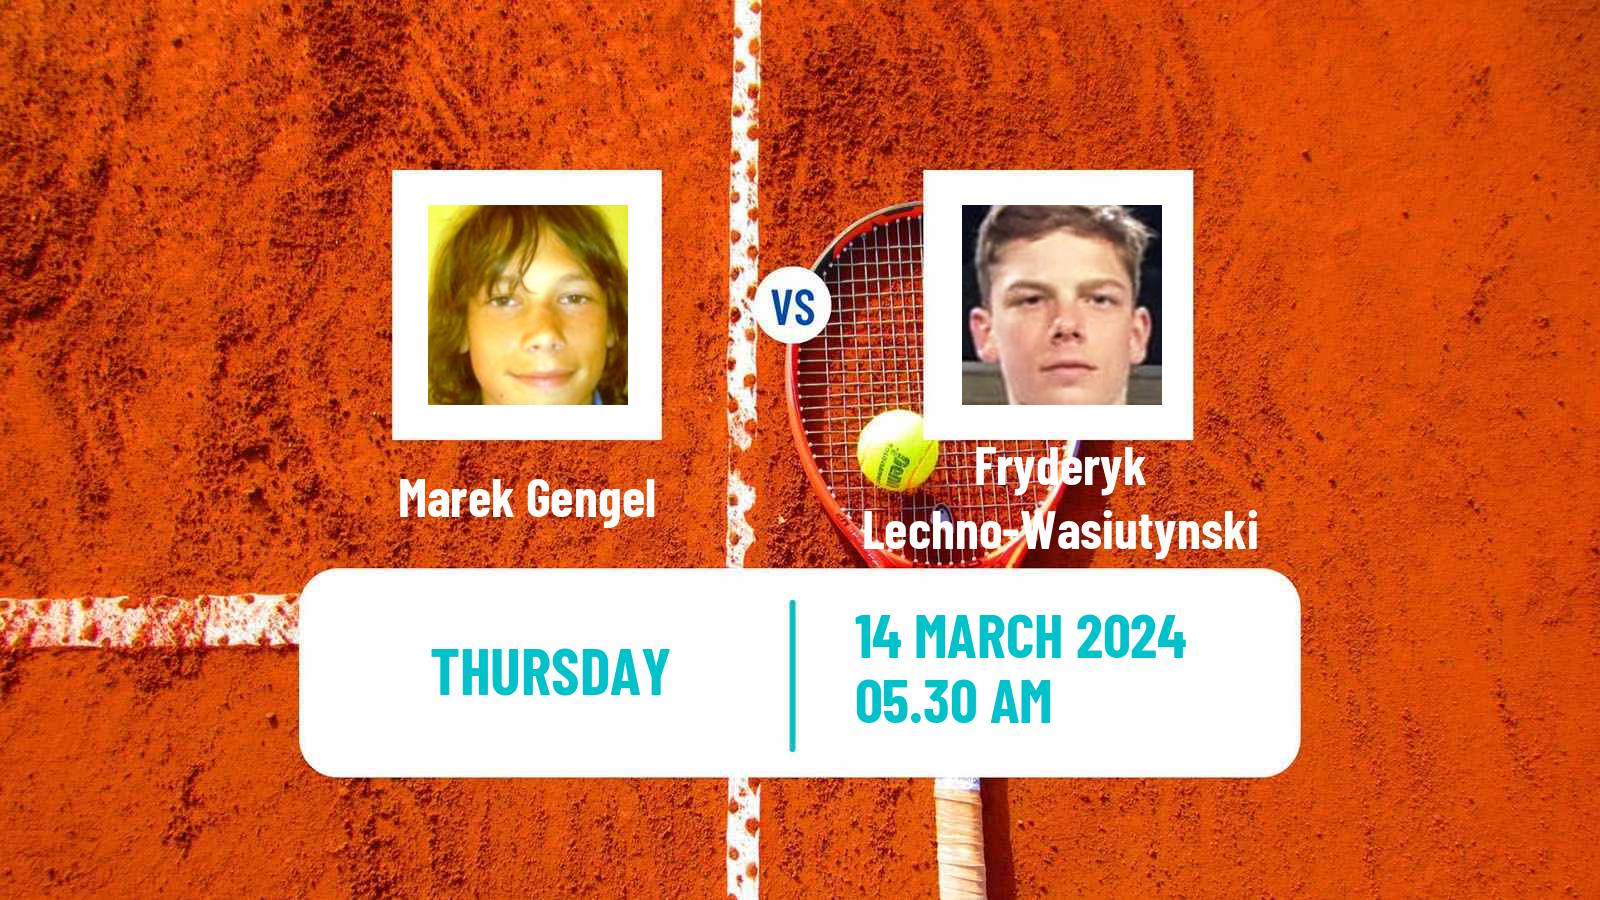 Tennis ITF M15 Sharm Elsheikh 7 Men Marek Gengel - Fryderyk Lechno-Wasiutynski